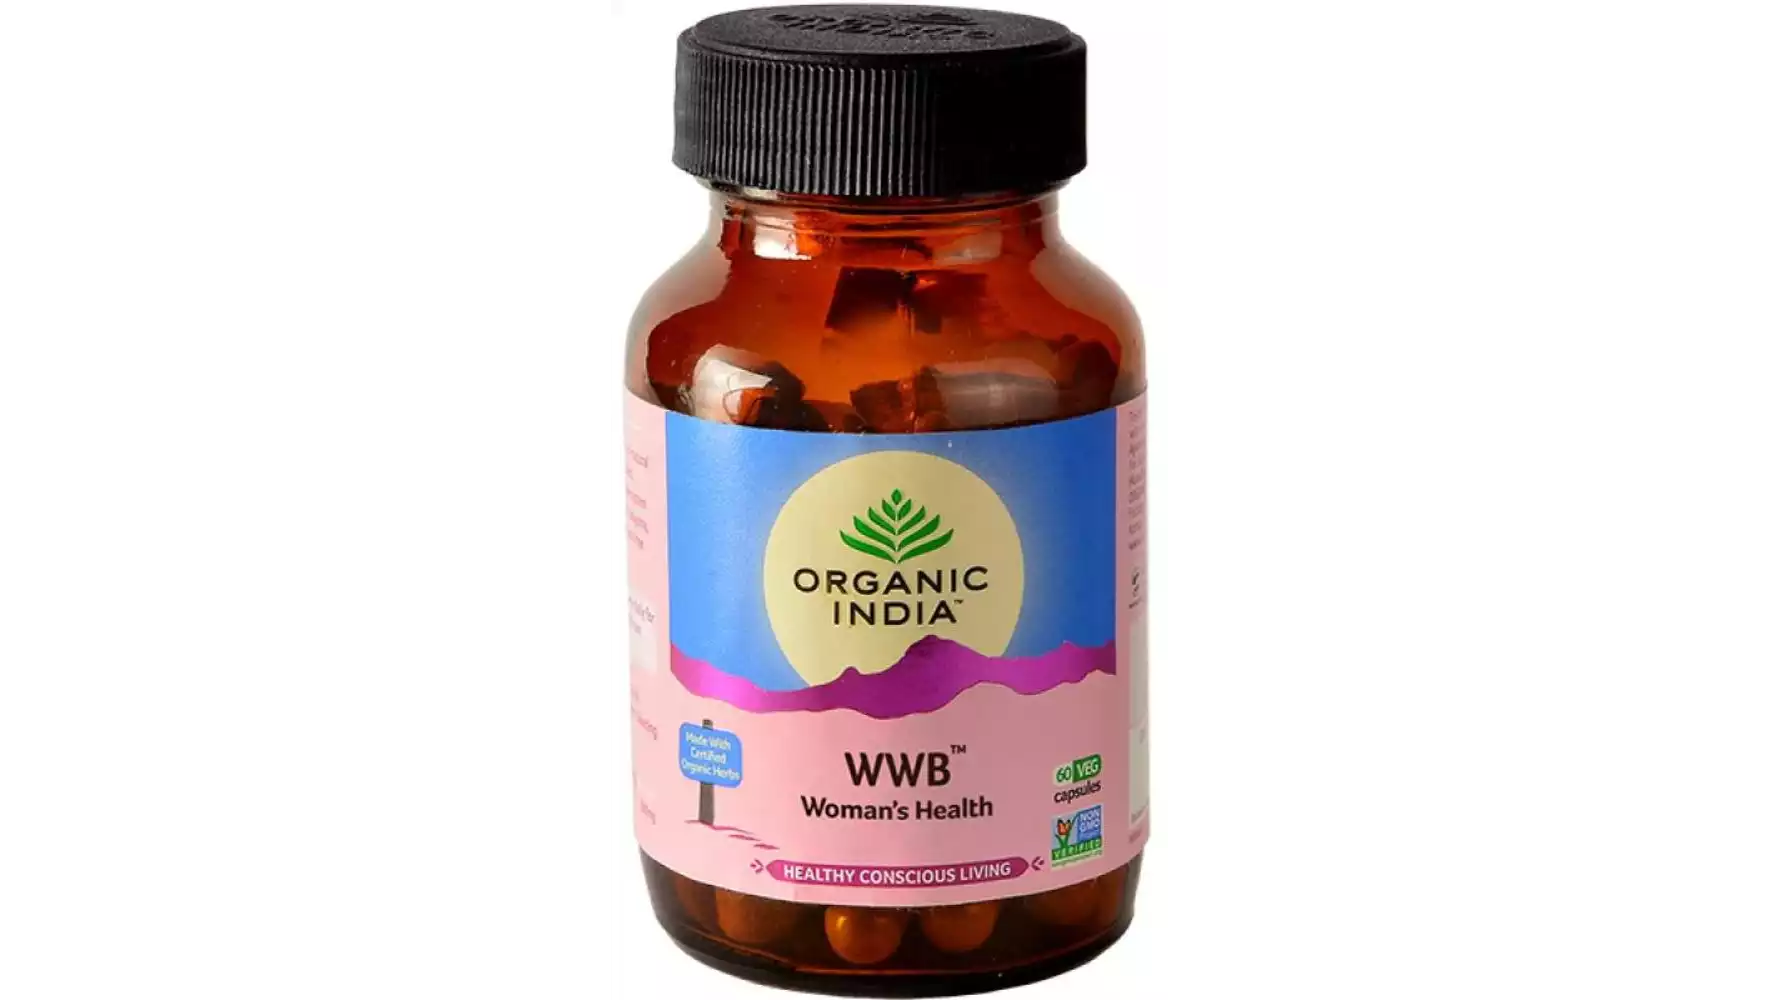 Organic India WWB (Womens Well Being) Capsules (60caps)